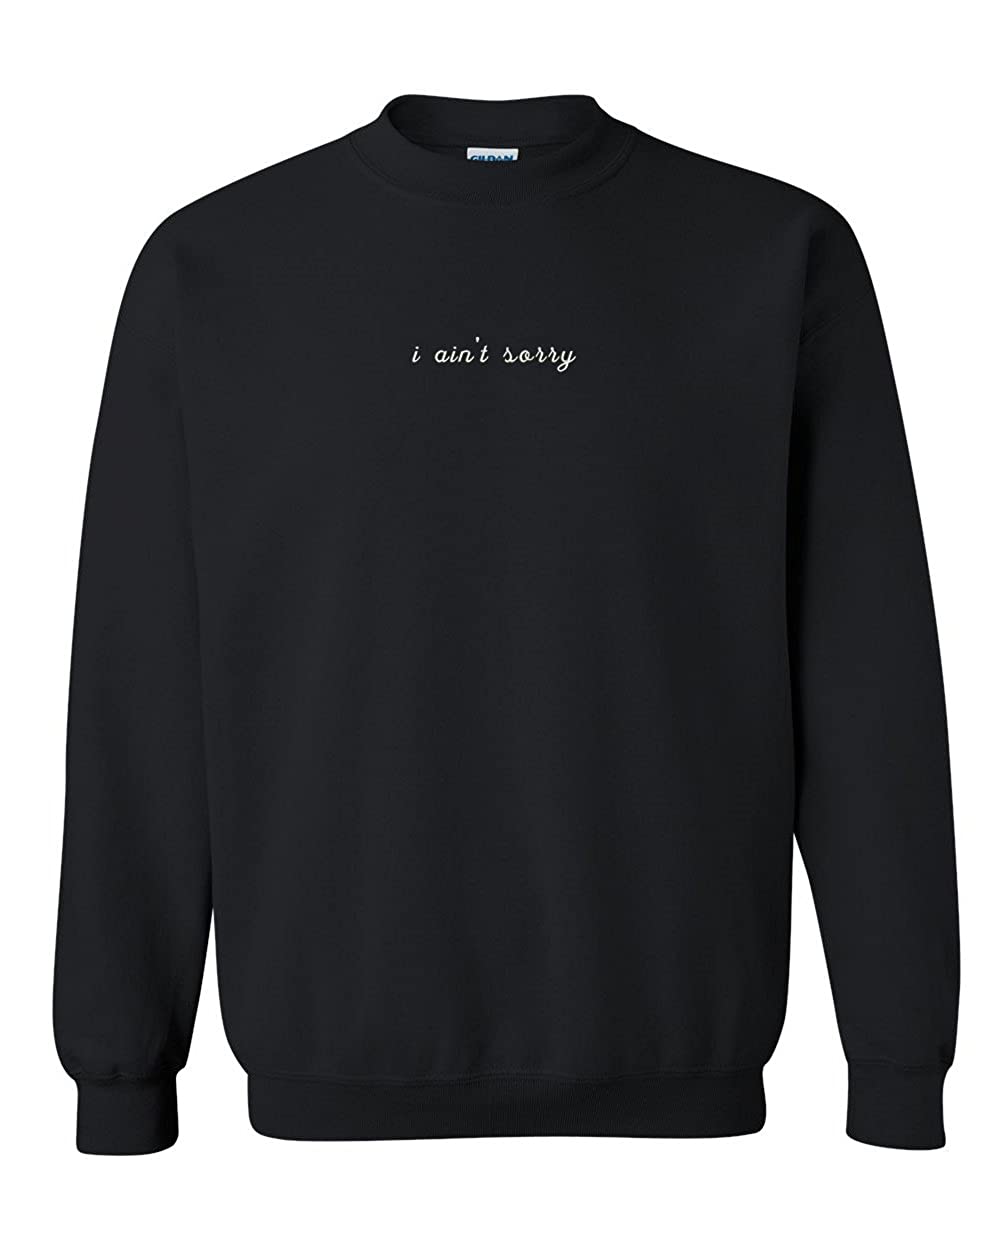 Trendy Apparel Shop Ain't Sorry Embroidered Crewneck Sweatshirt